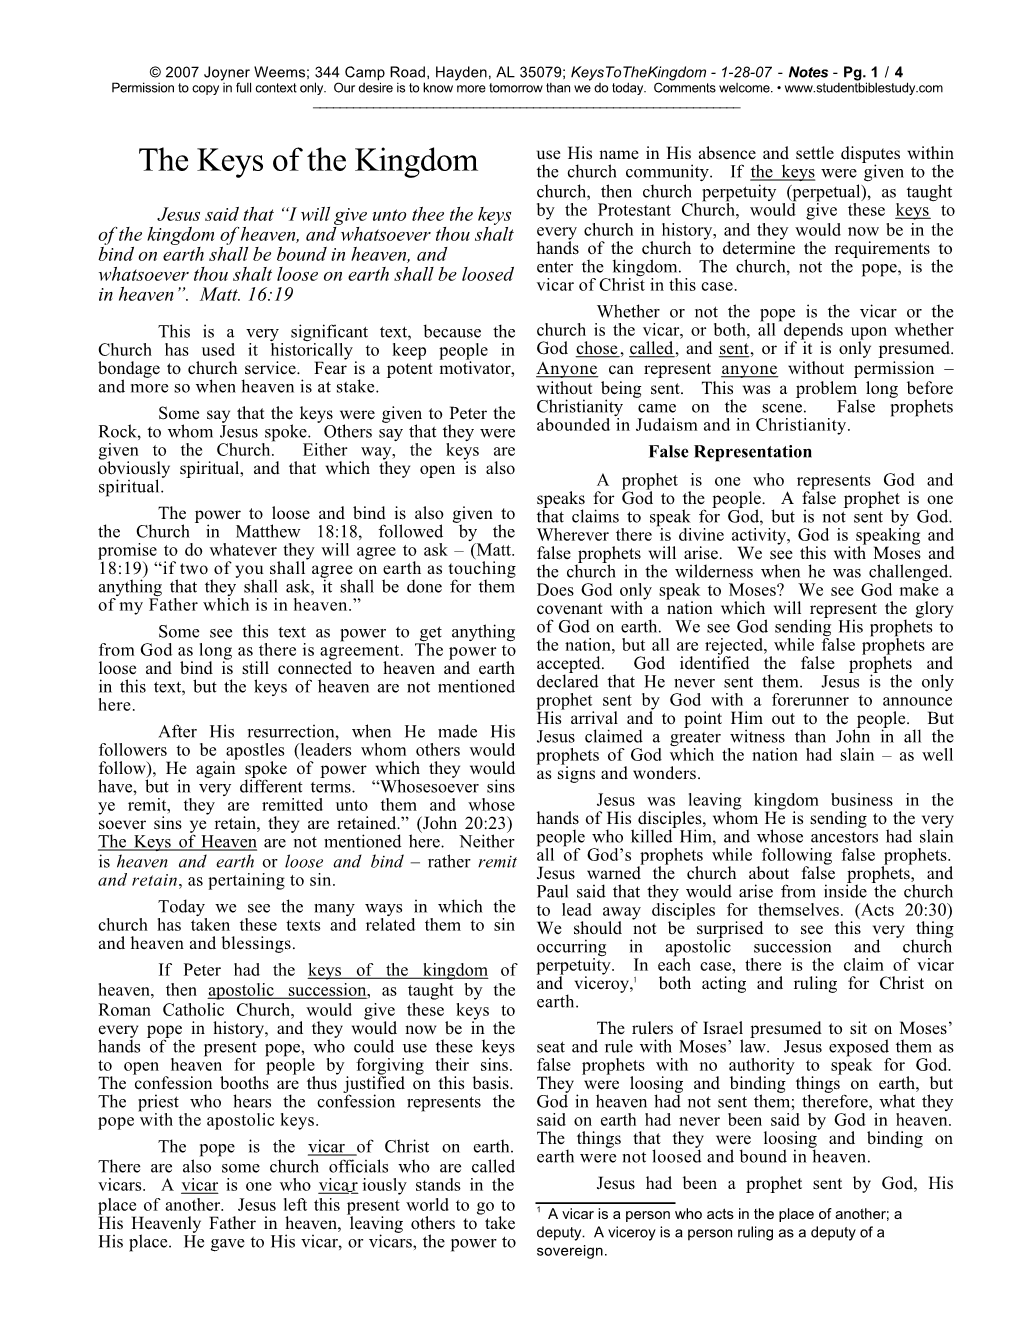 The Keys of the Kingdom the Church Community